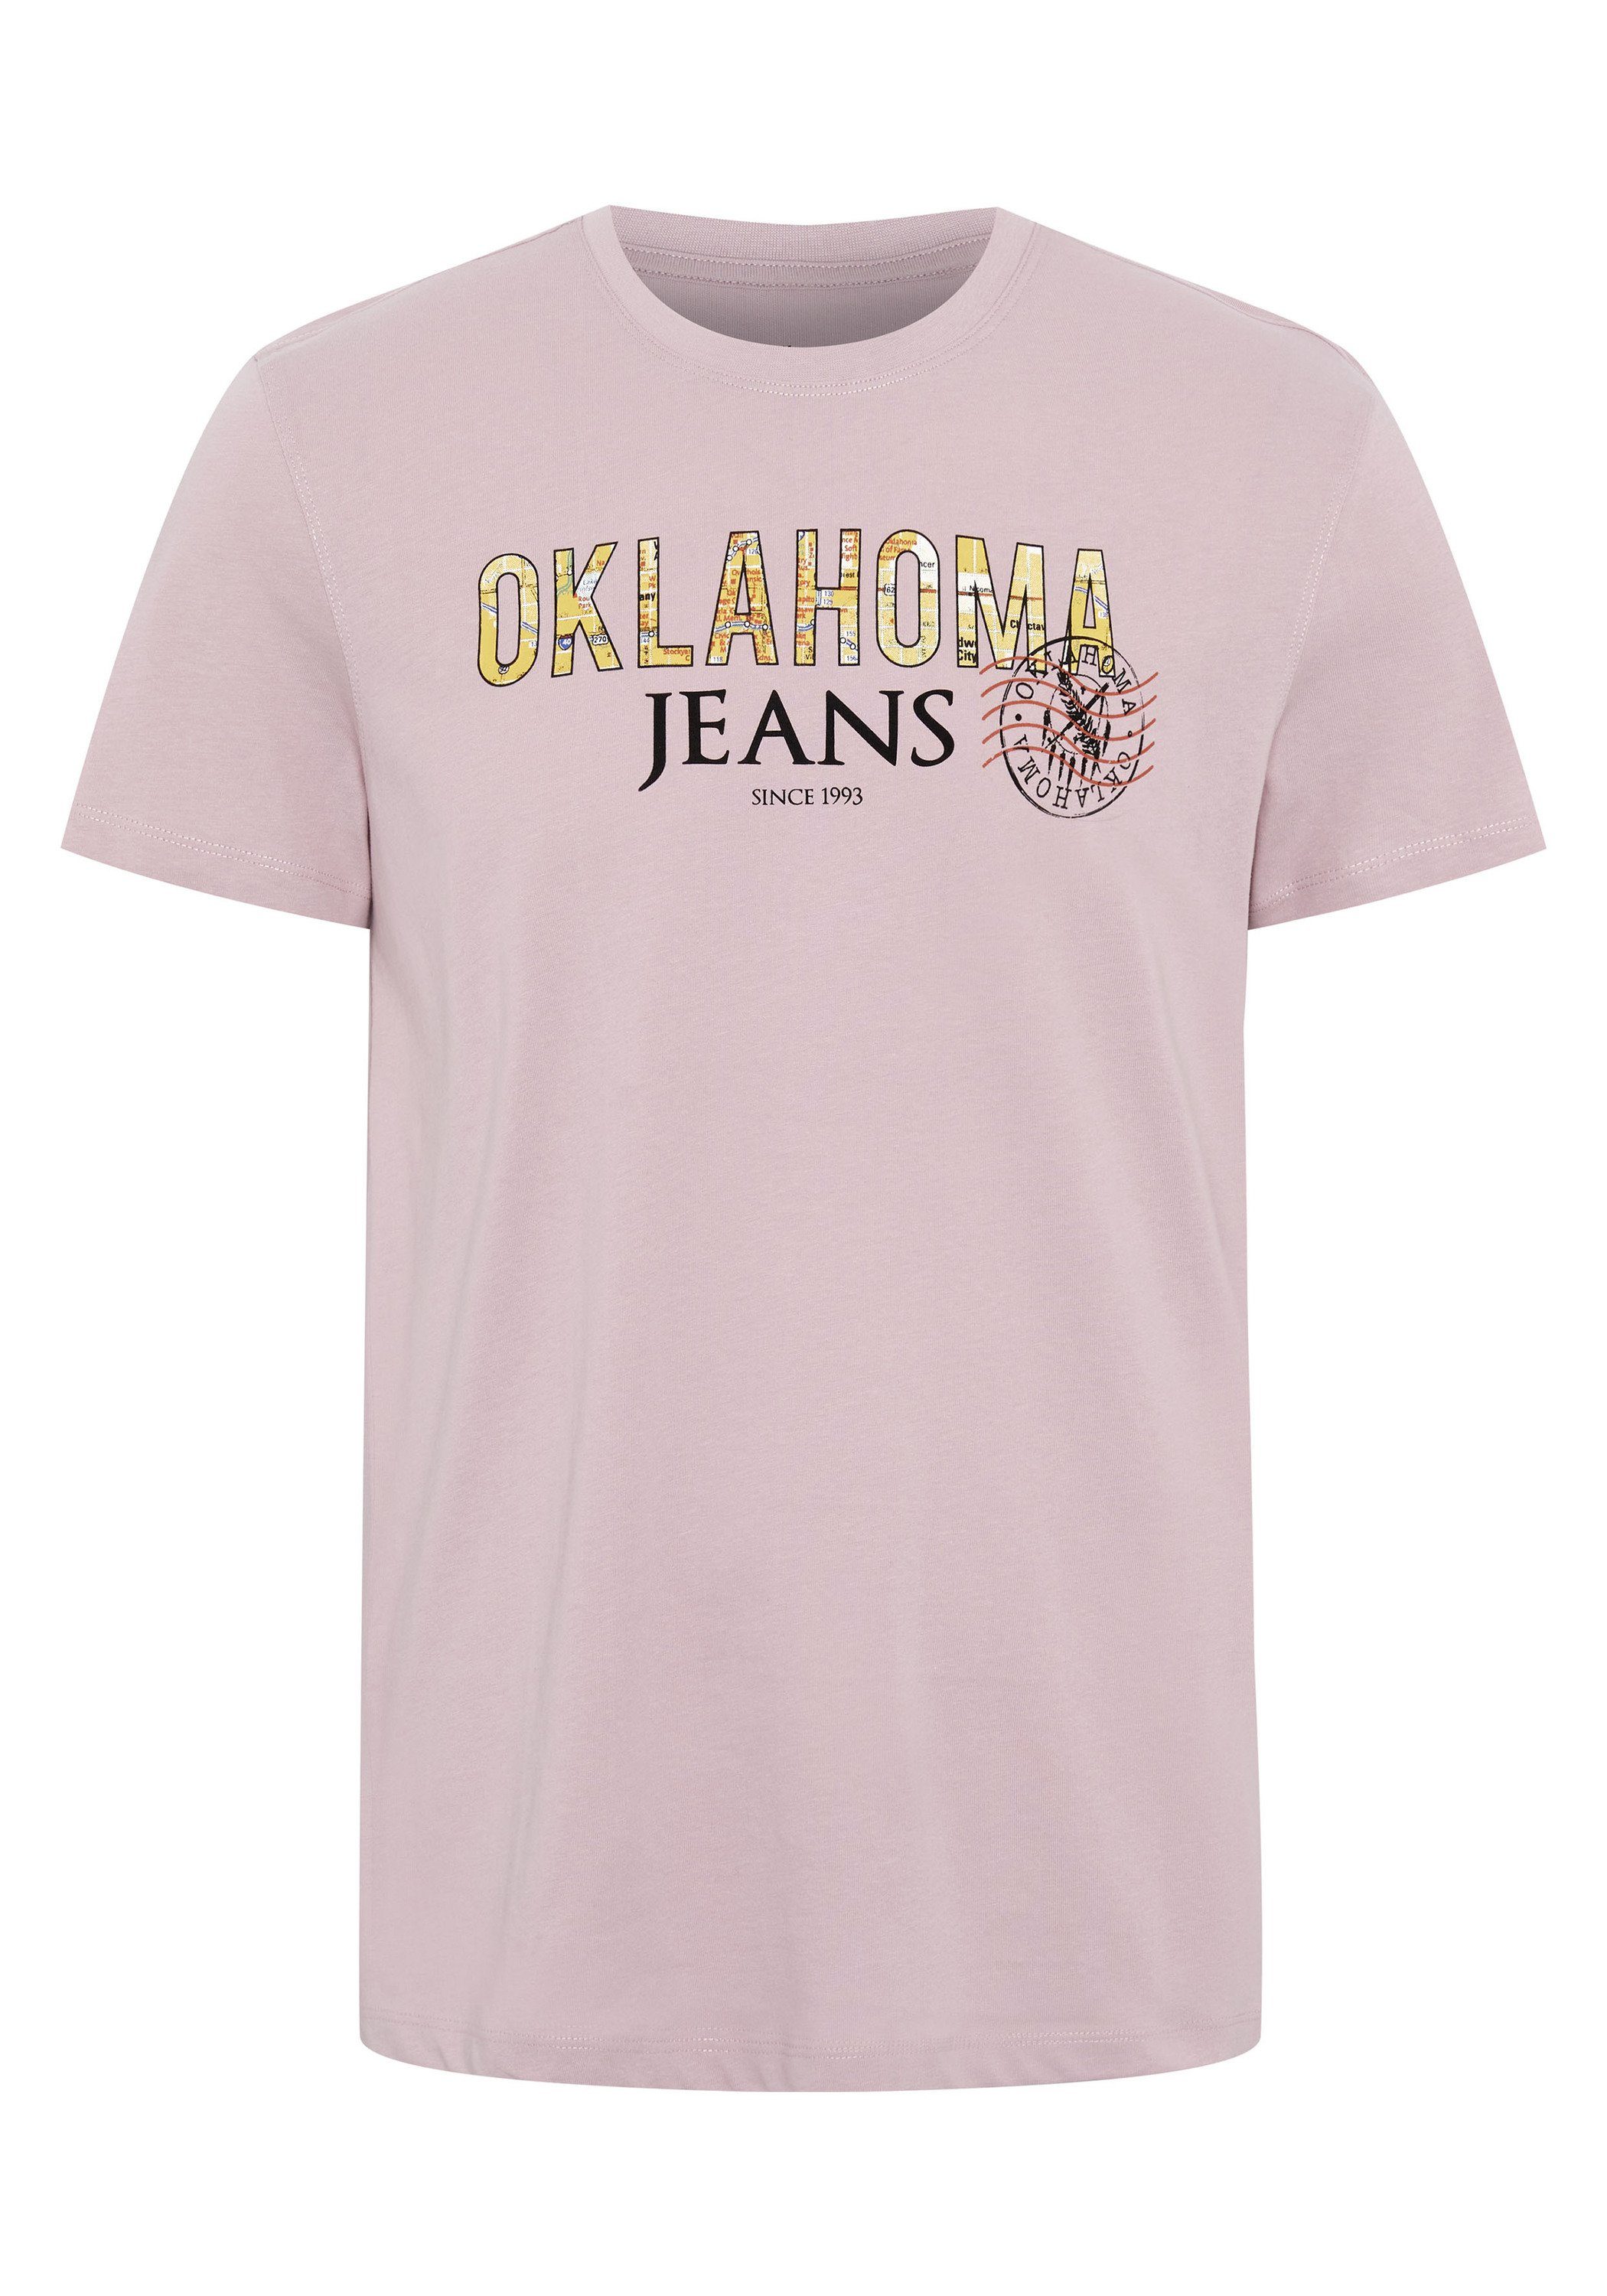 Oklahoma Jeans Print-Shirt mit Label-Print im City-Map-Look 15-2705 Keepsake Lilac